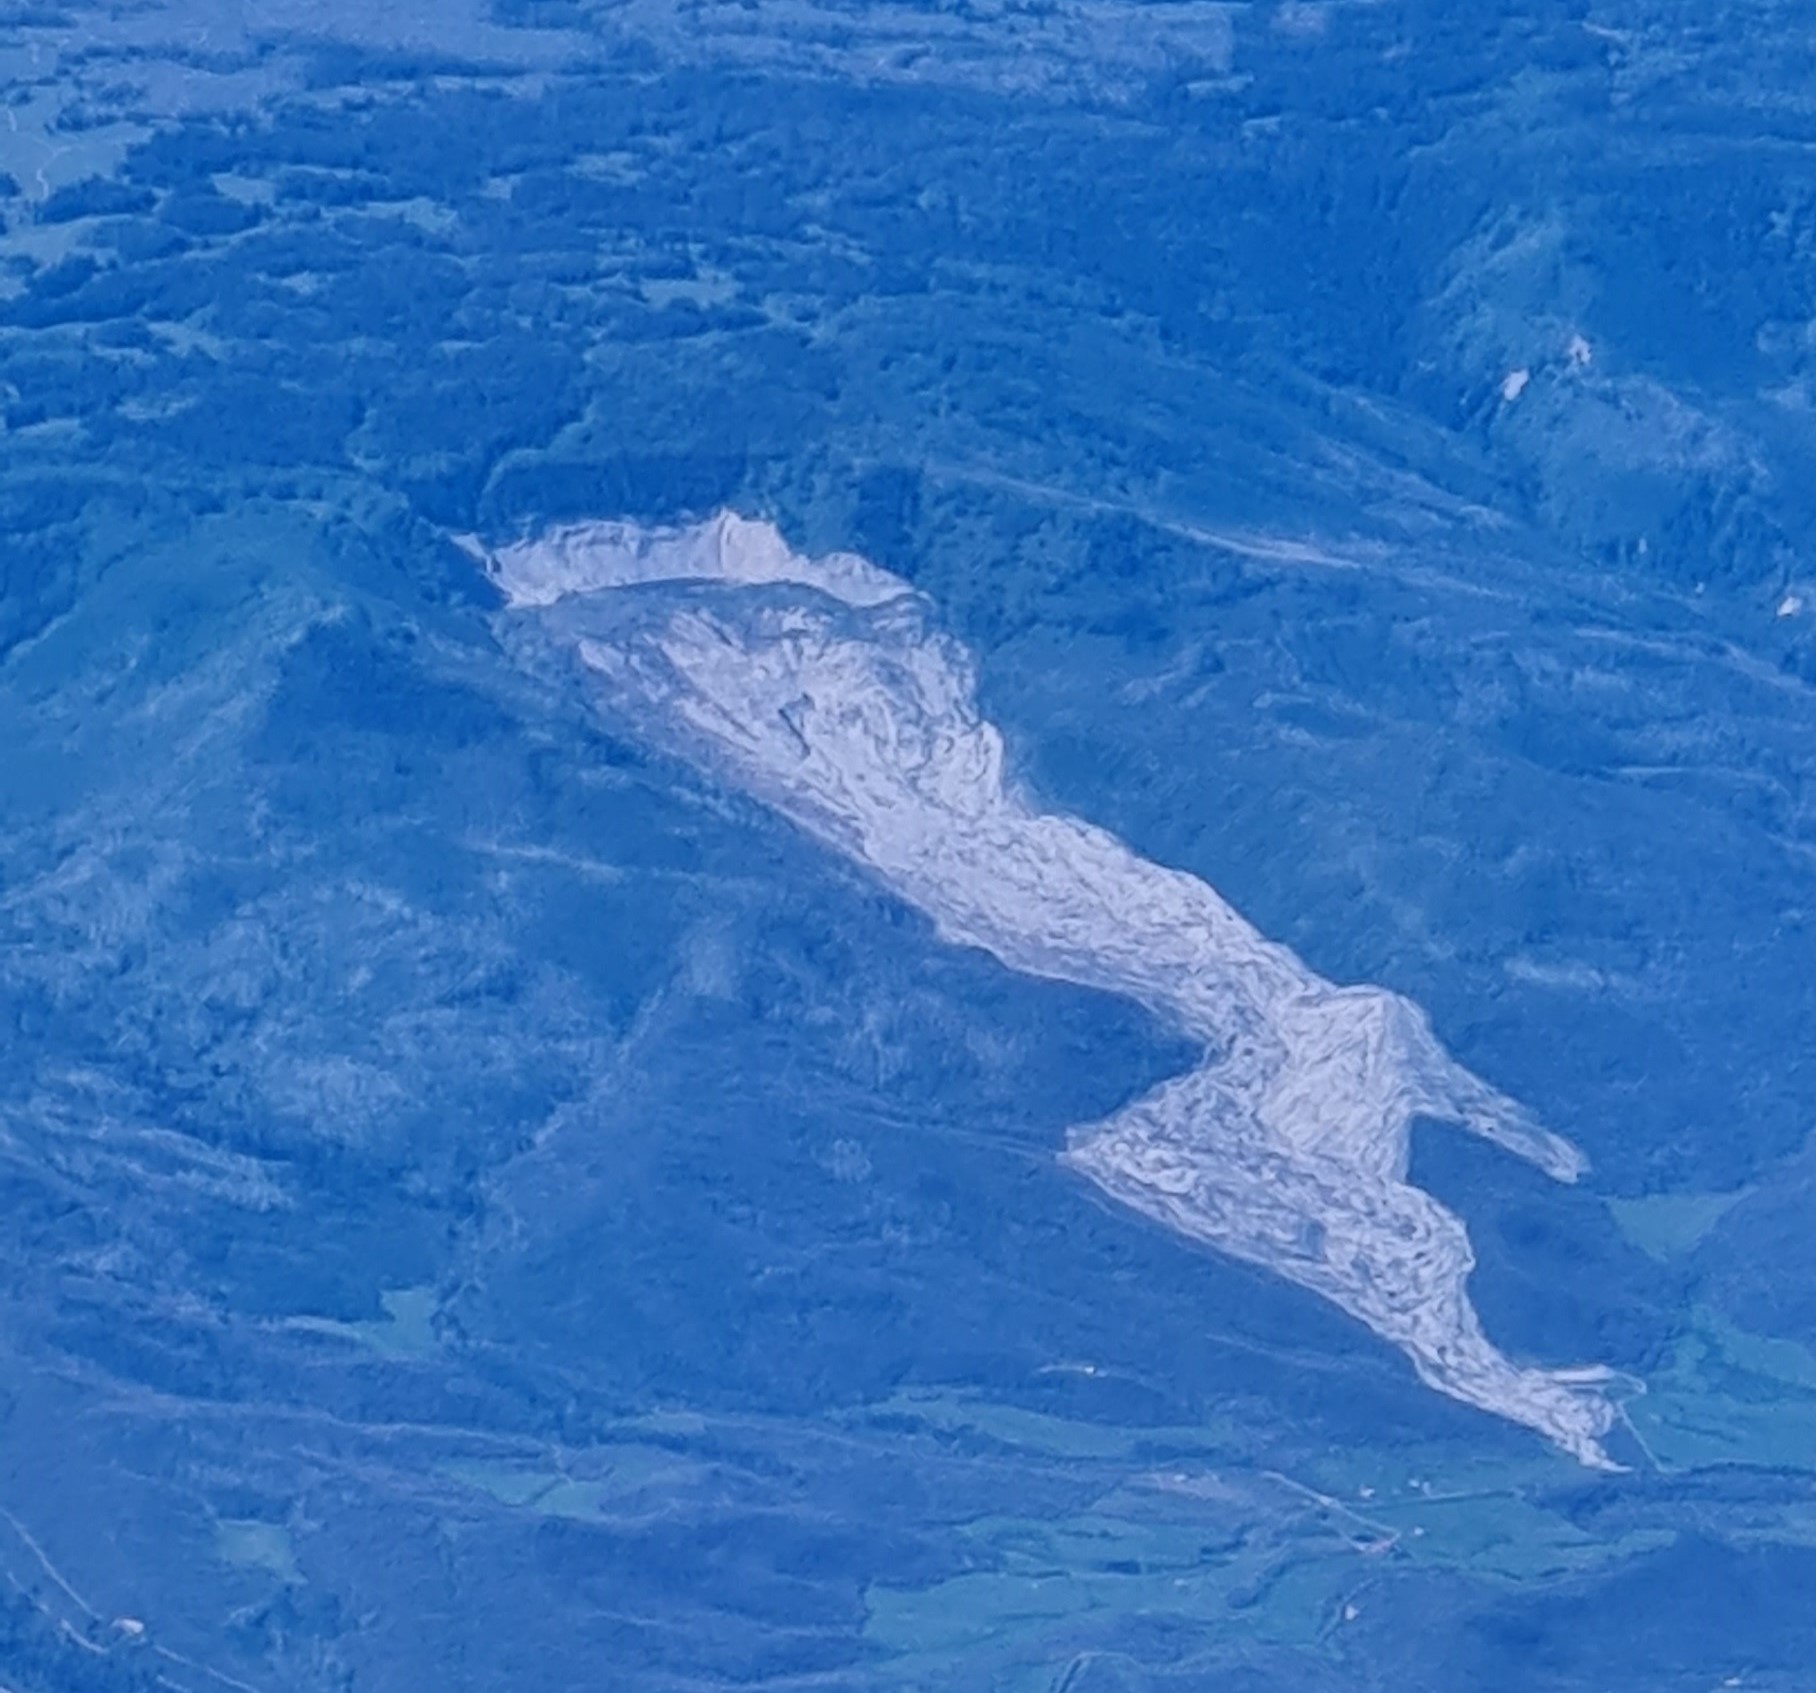 The West Salt Creek landslide in Colorado